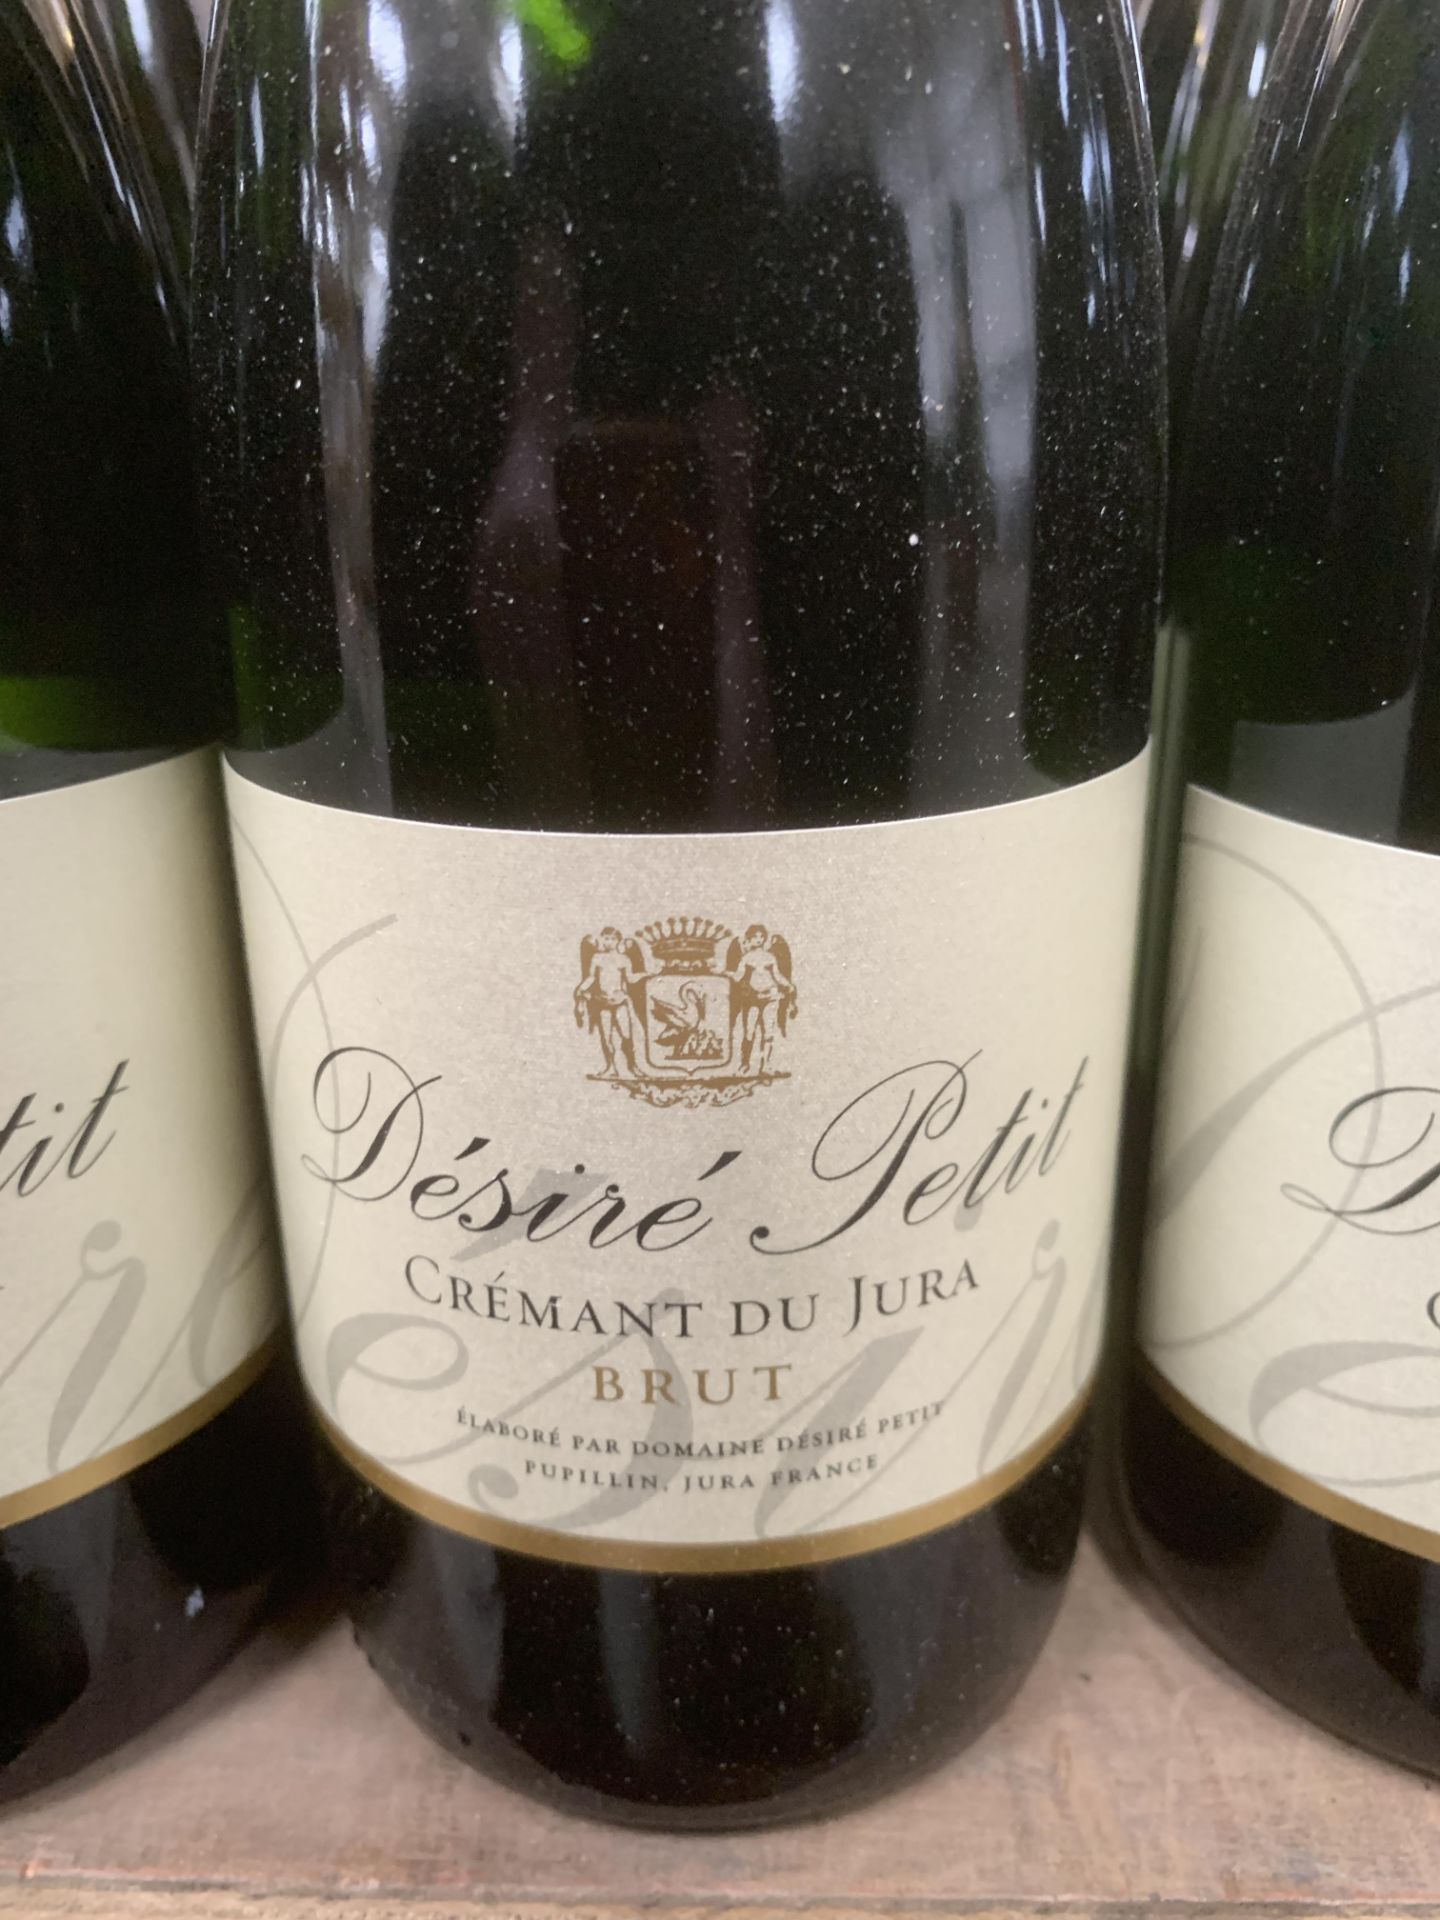 9x Bottles of Desire Petit Cremant De Jura - Image 2 of 3